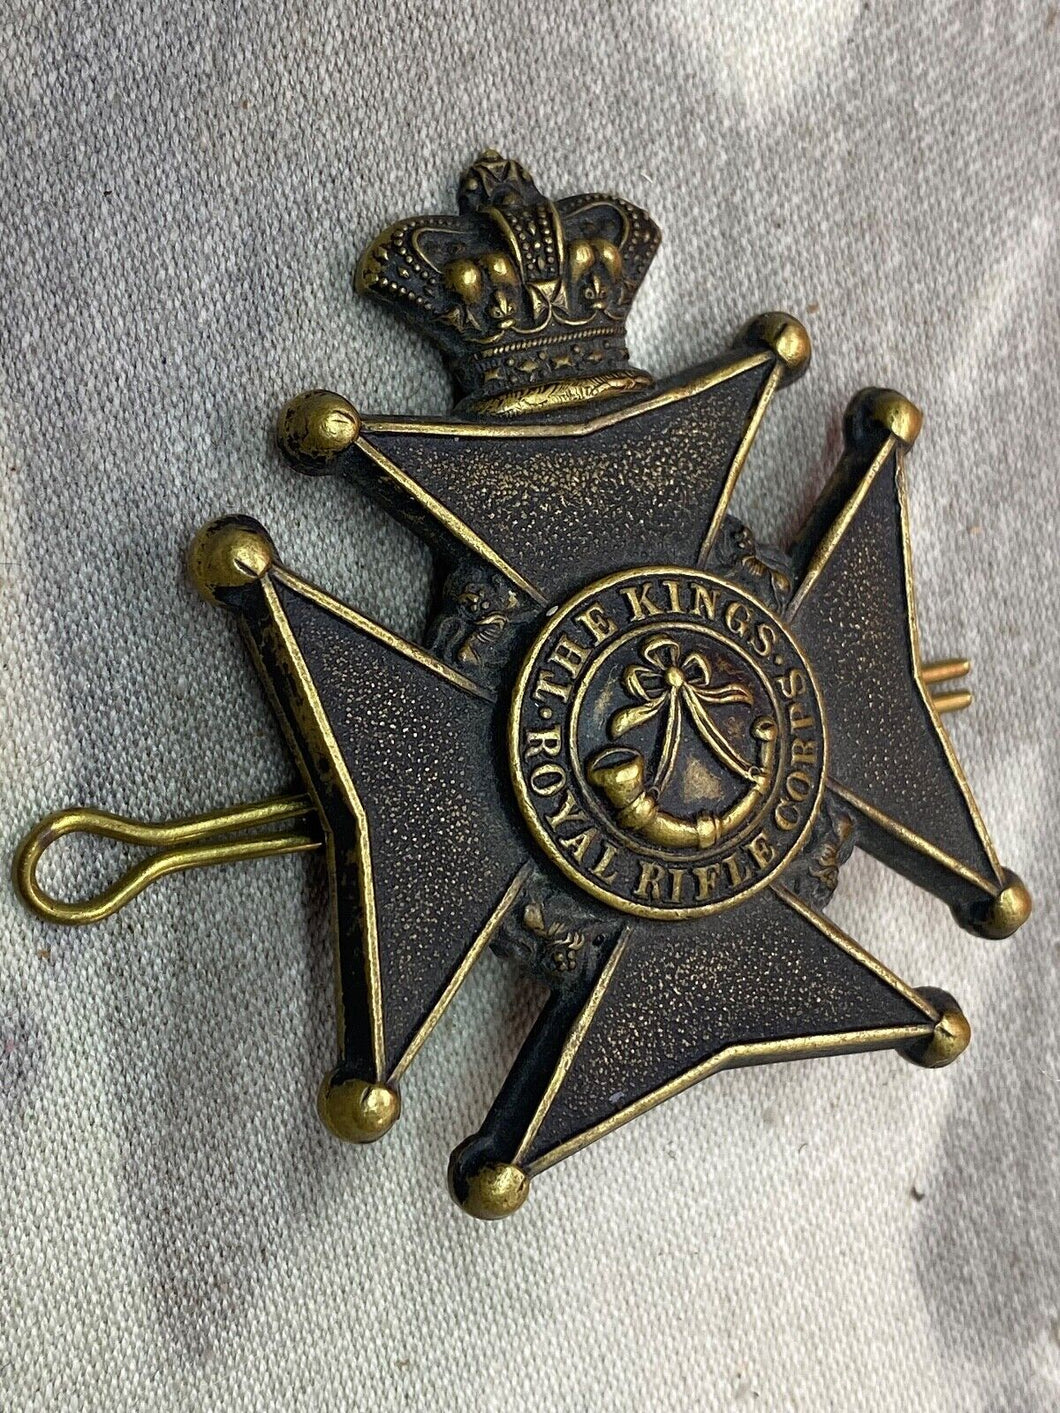 Original Victorian Era British Army The King's Royal Rifle Corps Cap Badge